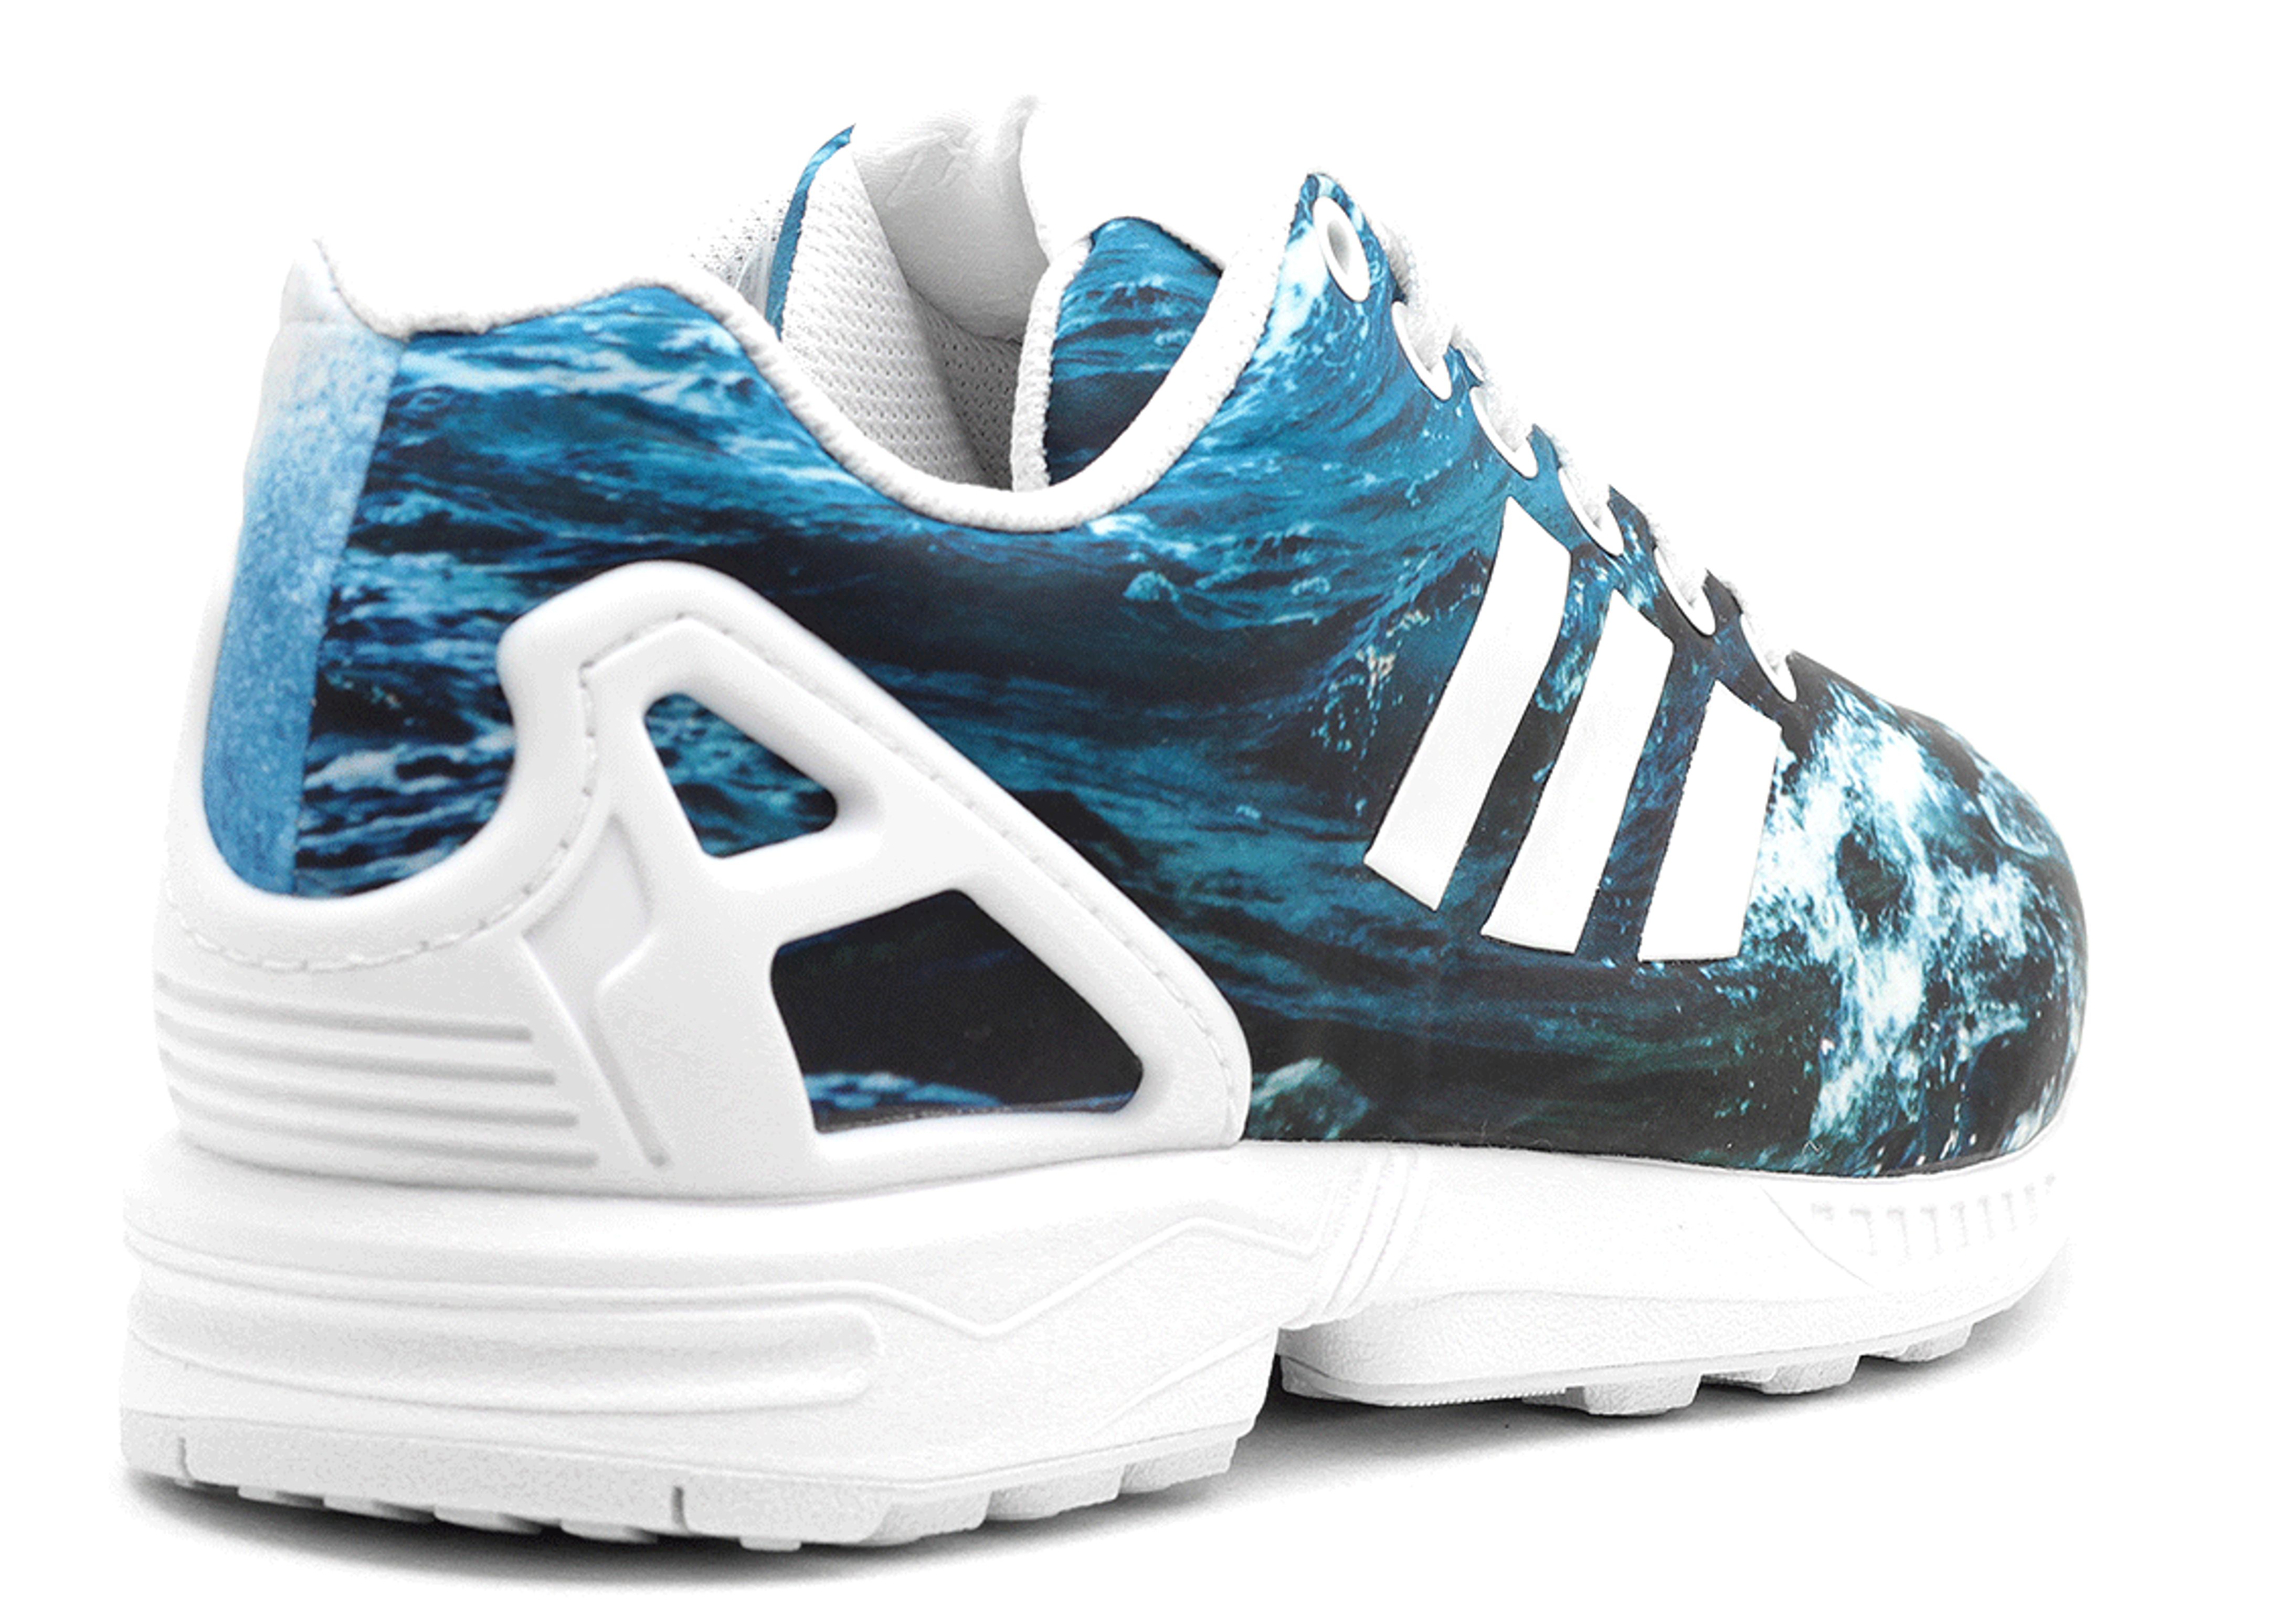 adidas zx flux ocean 9.5